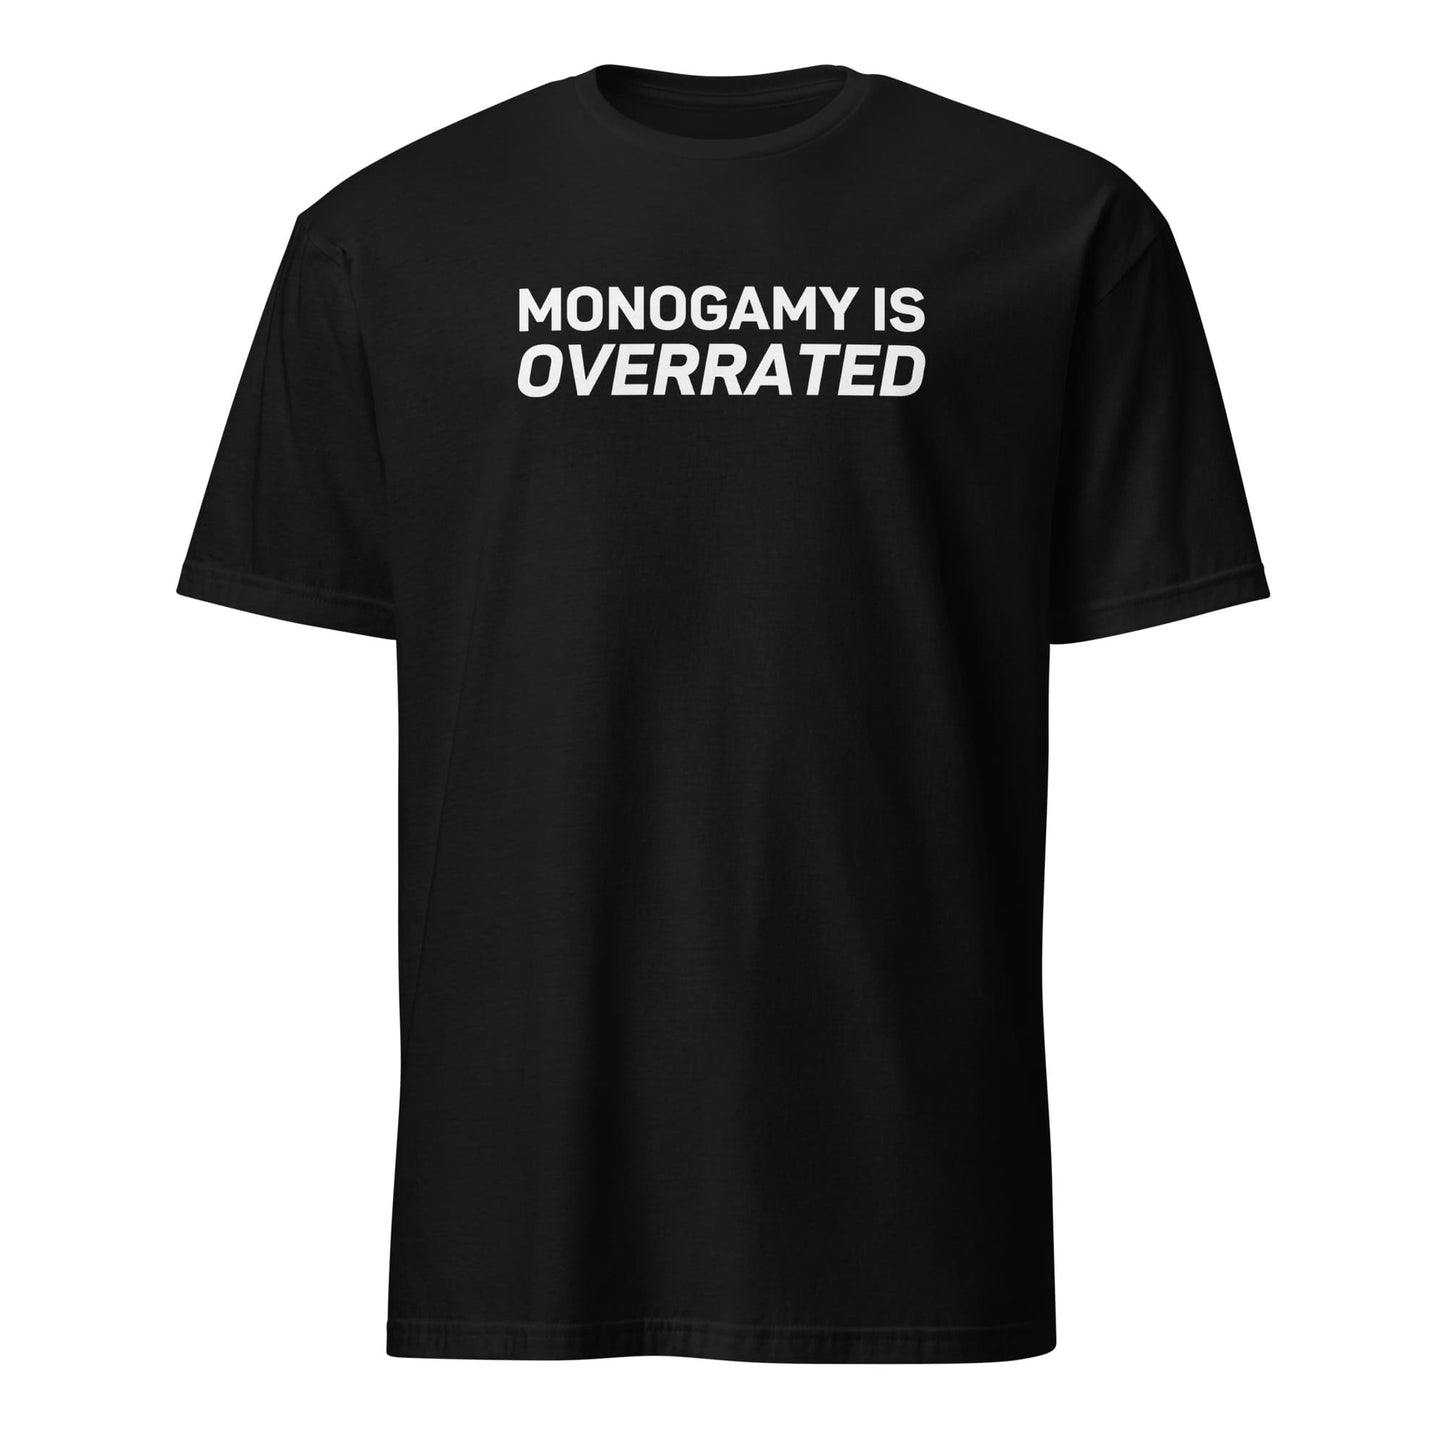 polyamory shirt, statement polyamorous pride quote, black